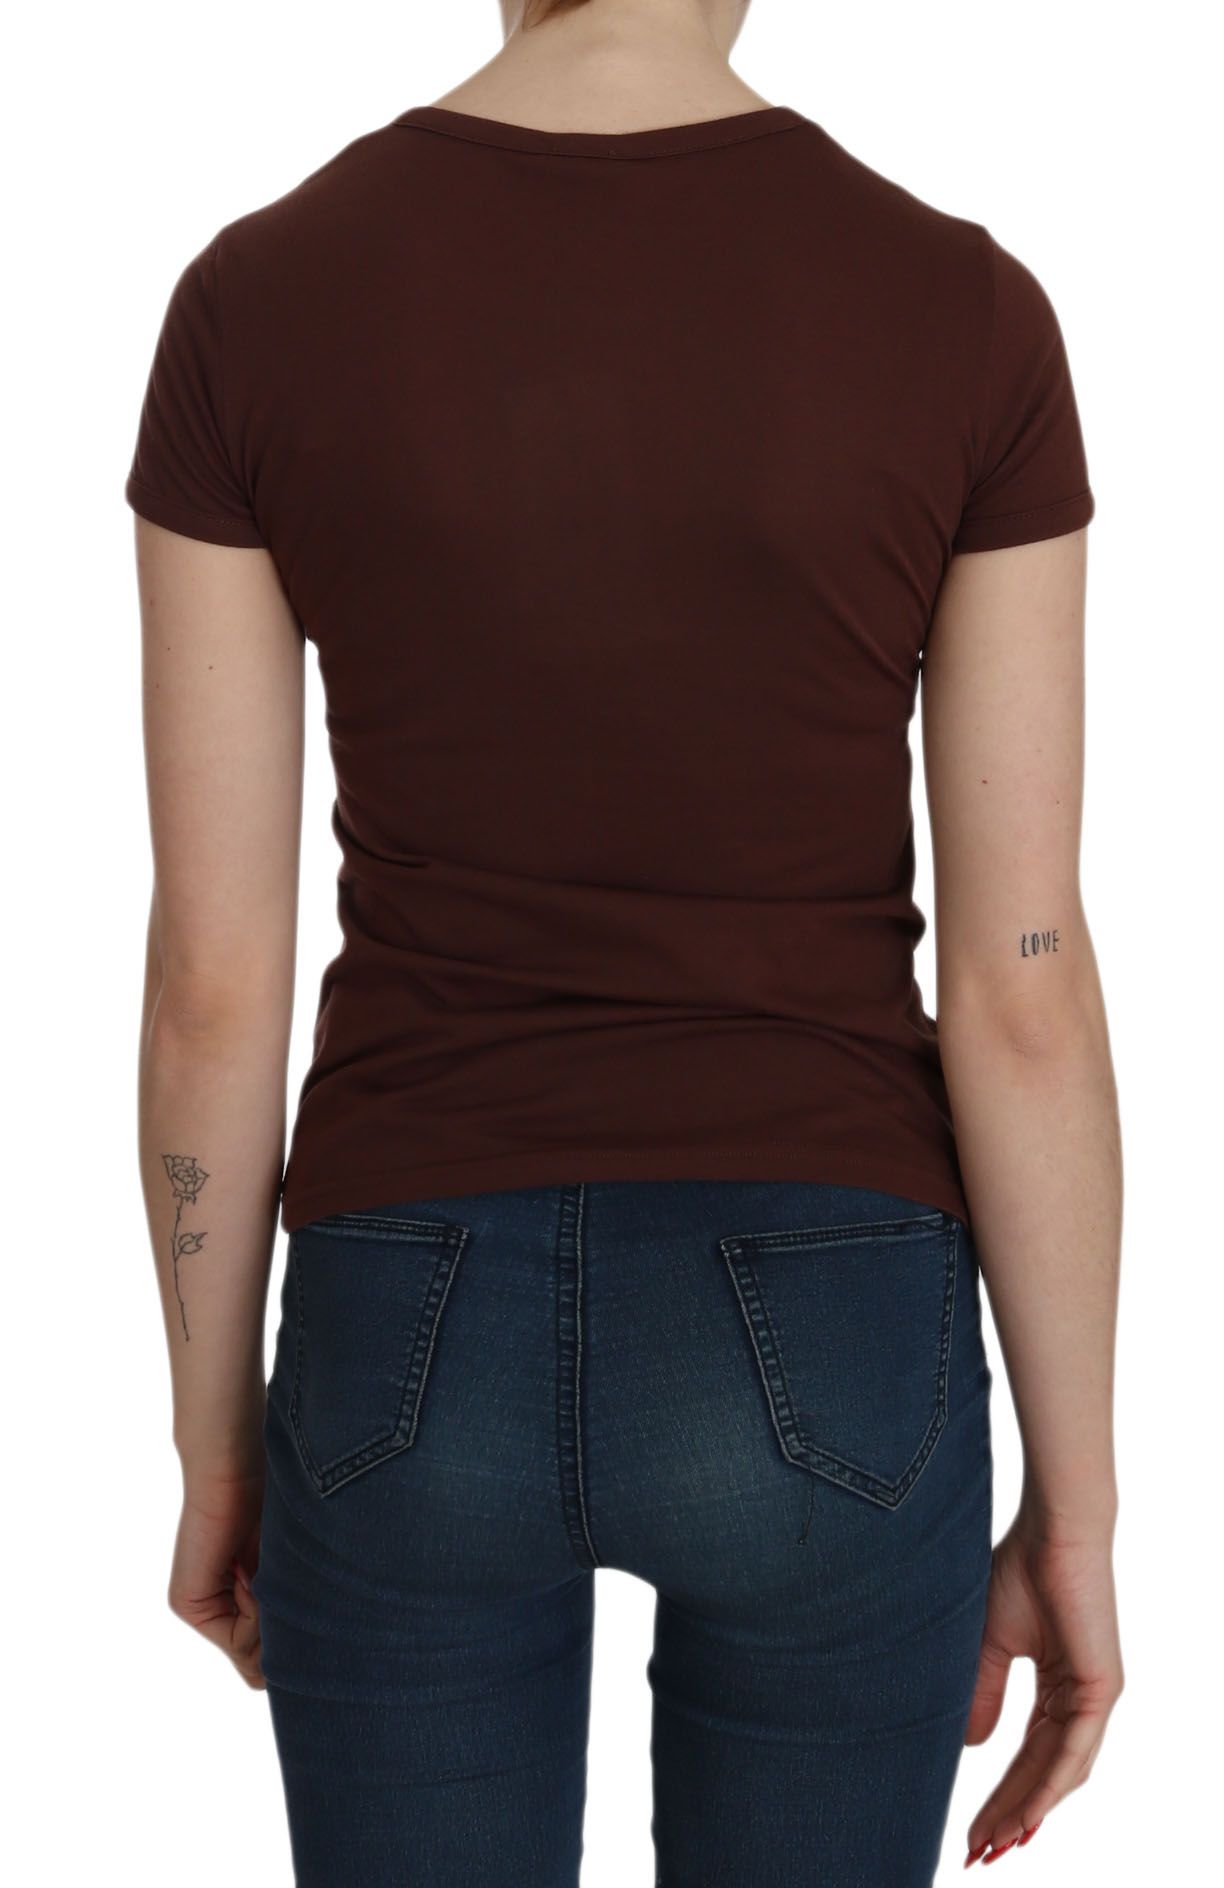 Exte Brown Heart Print Crew Neck T-shirt Short Sleeve Blouse